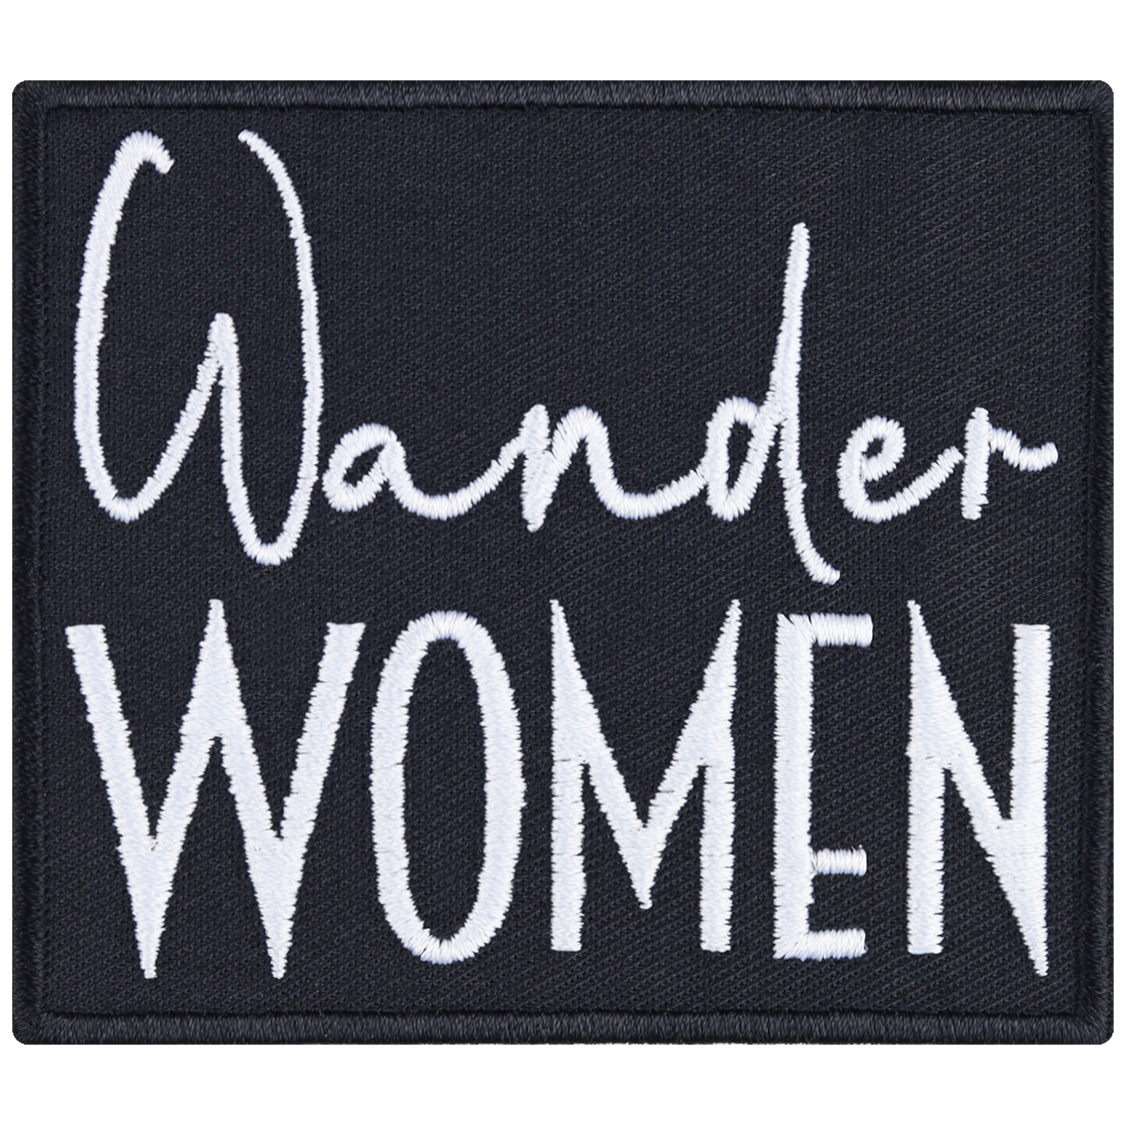 Wander Women - Patch